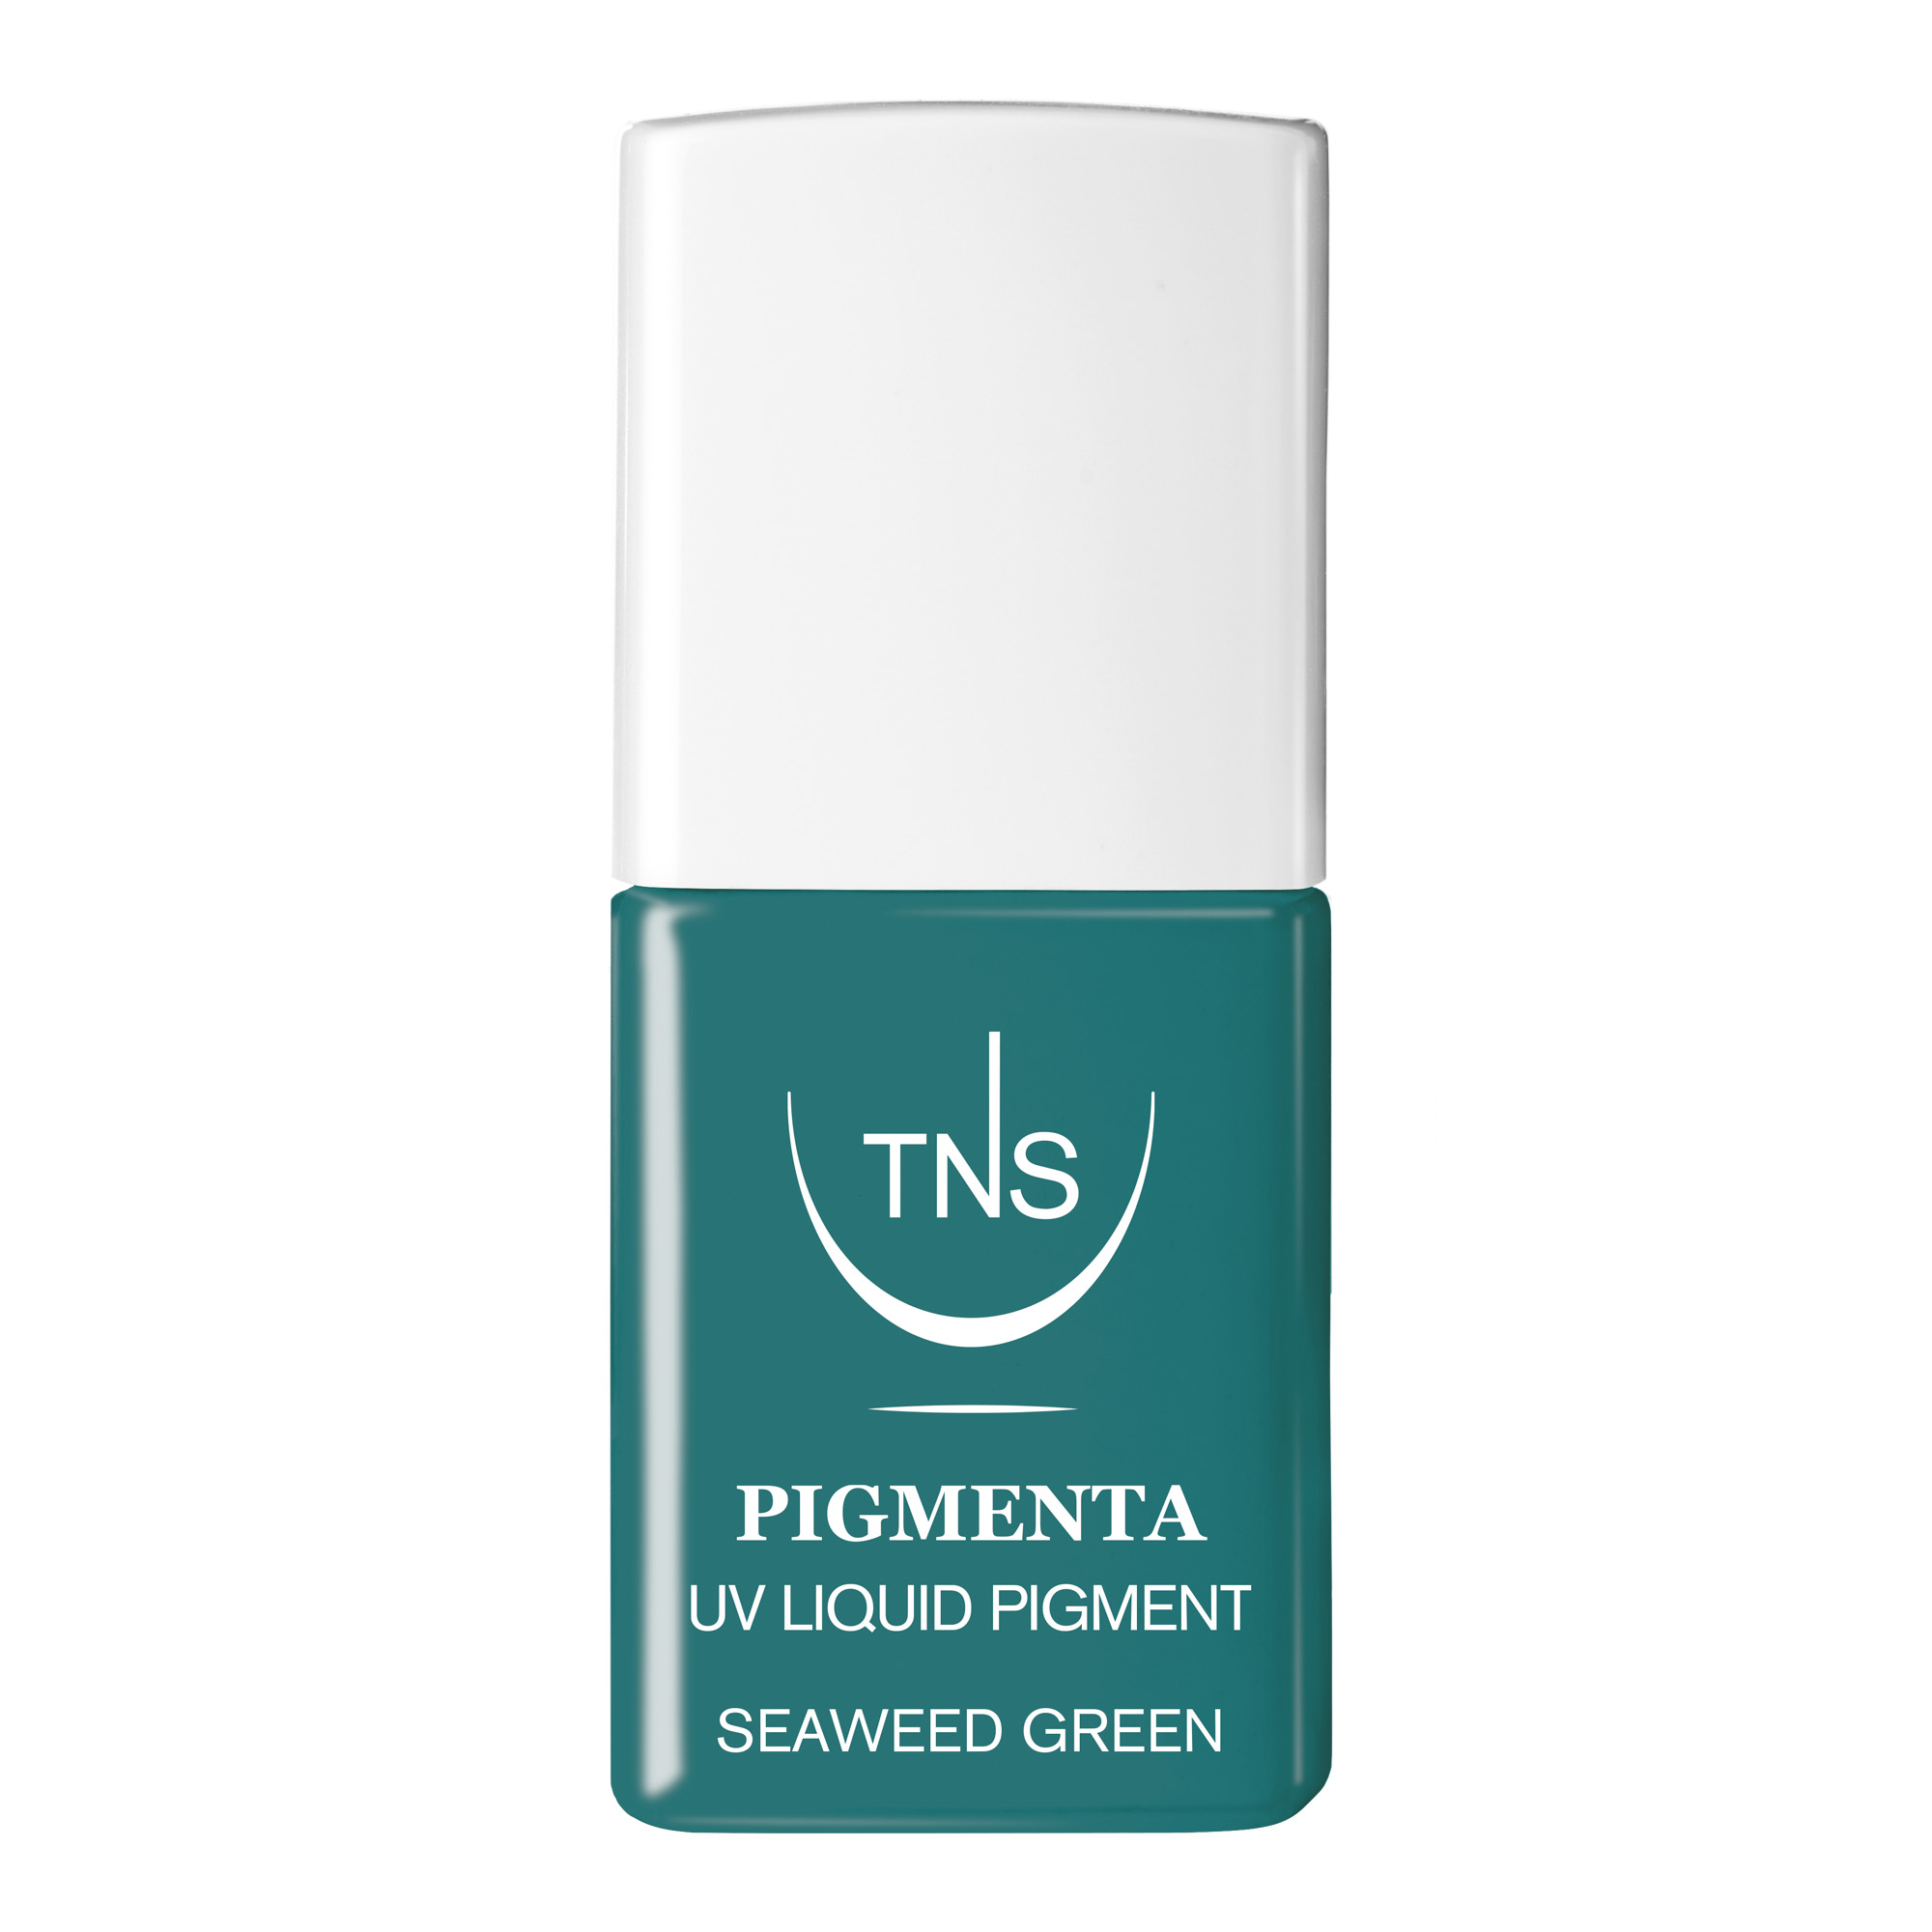 UV Liquid Pigment Seaweed Green dark emerald green 10 ml Pigmenta TNS